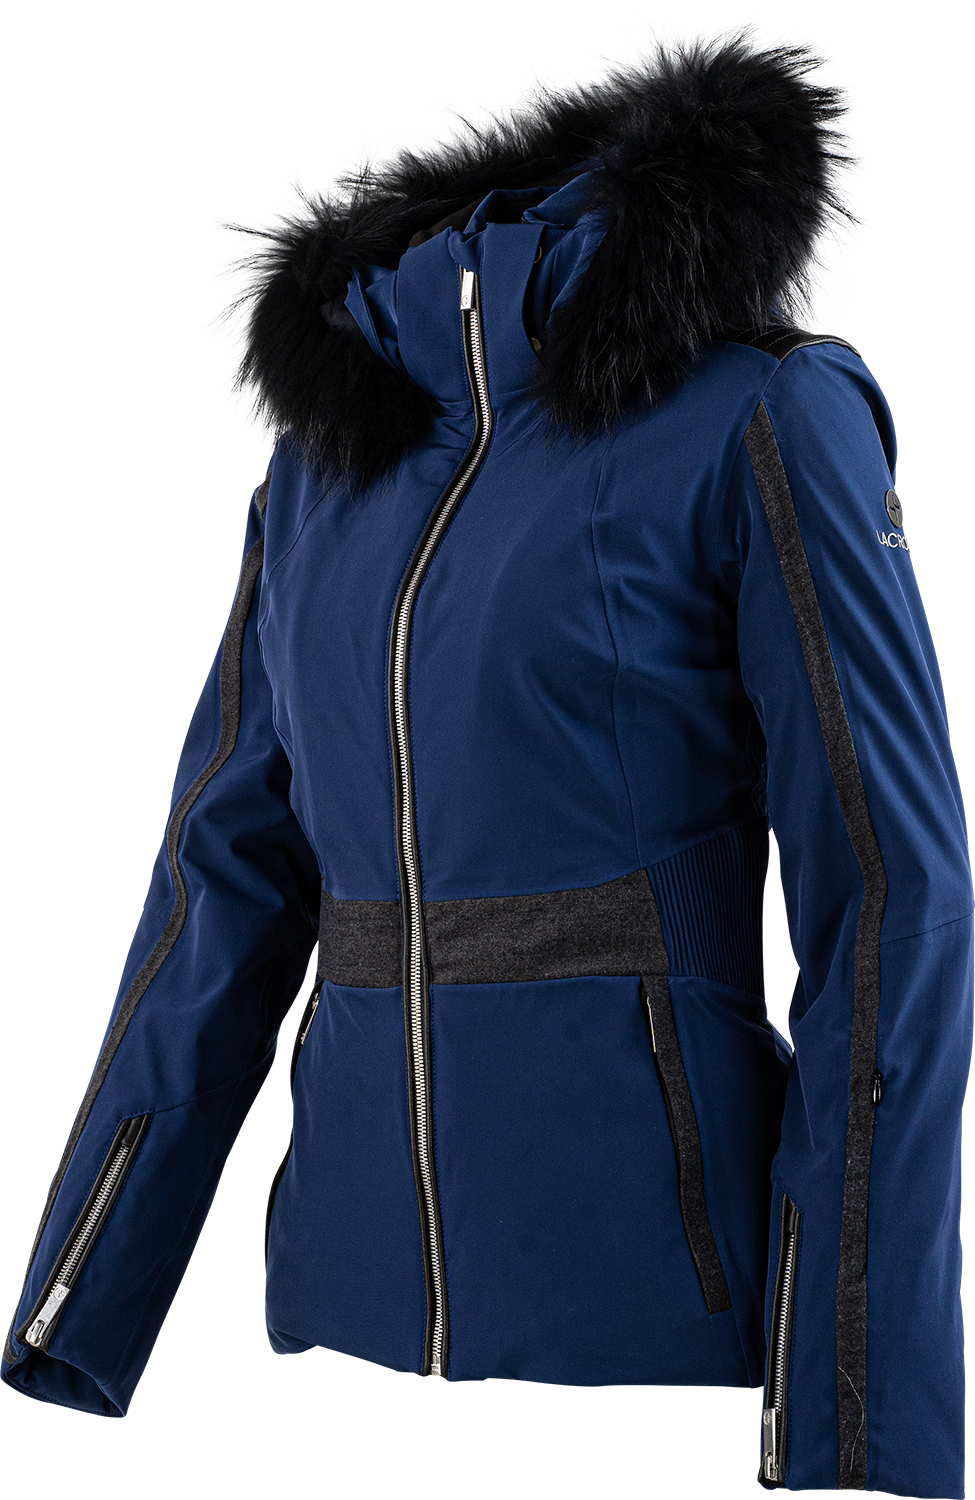 Crystal women's ski jacket, Lacroix